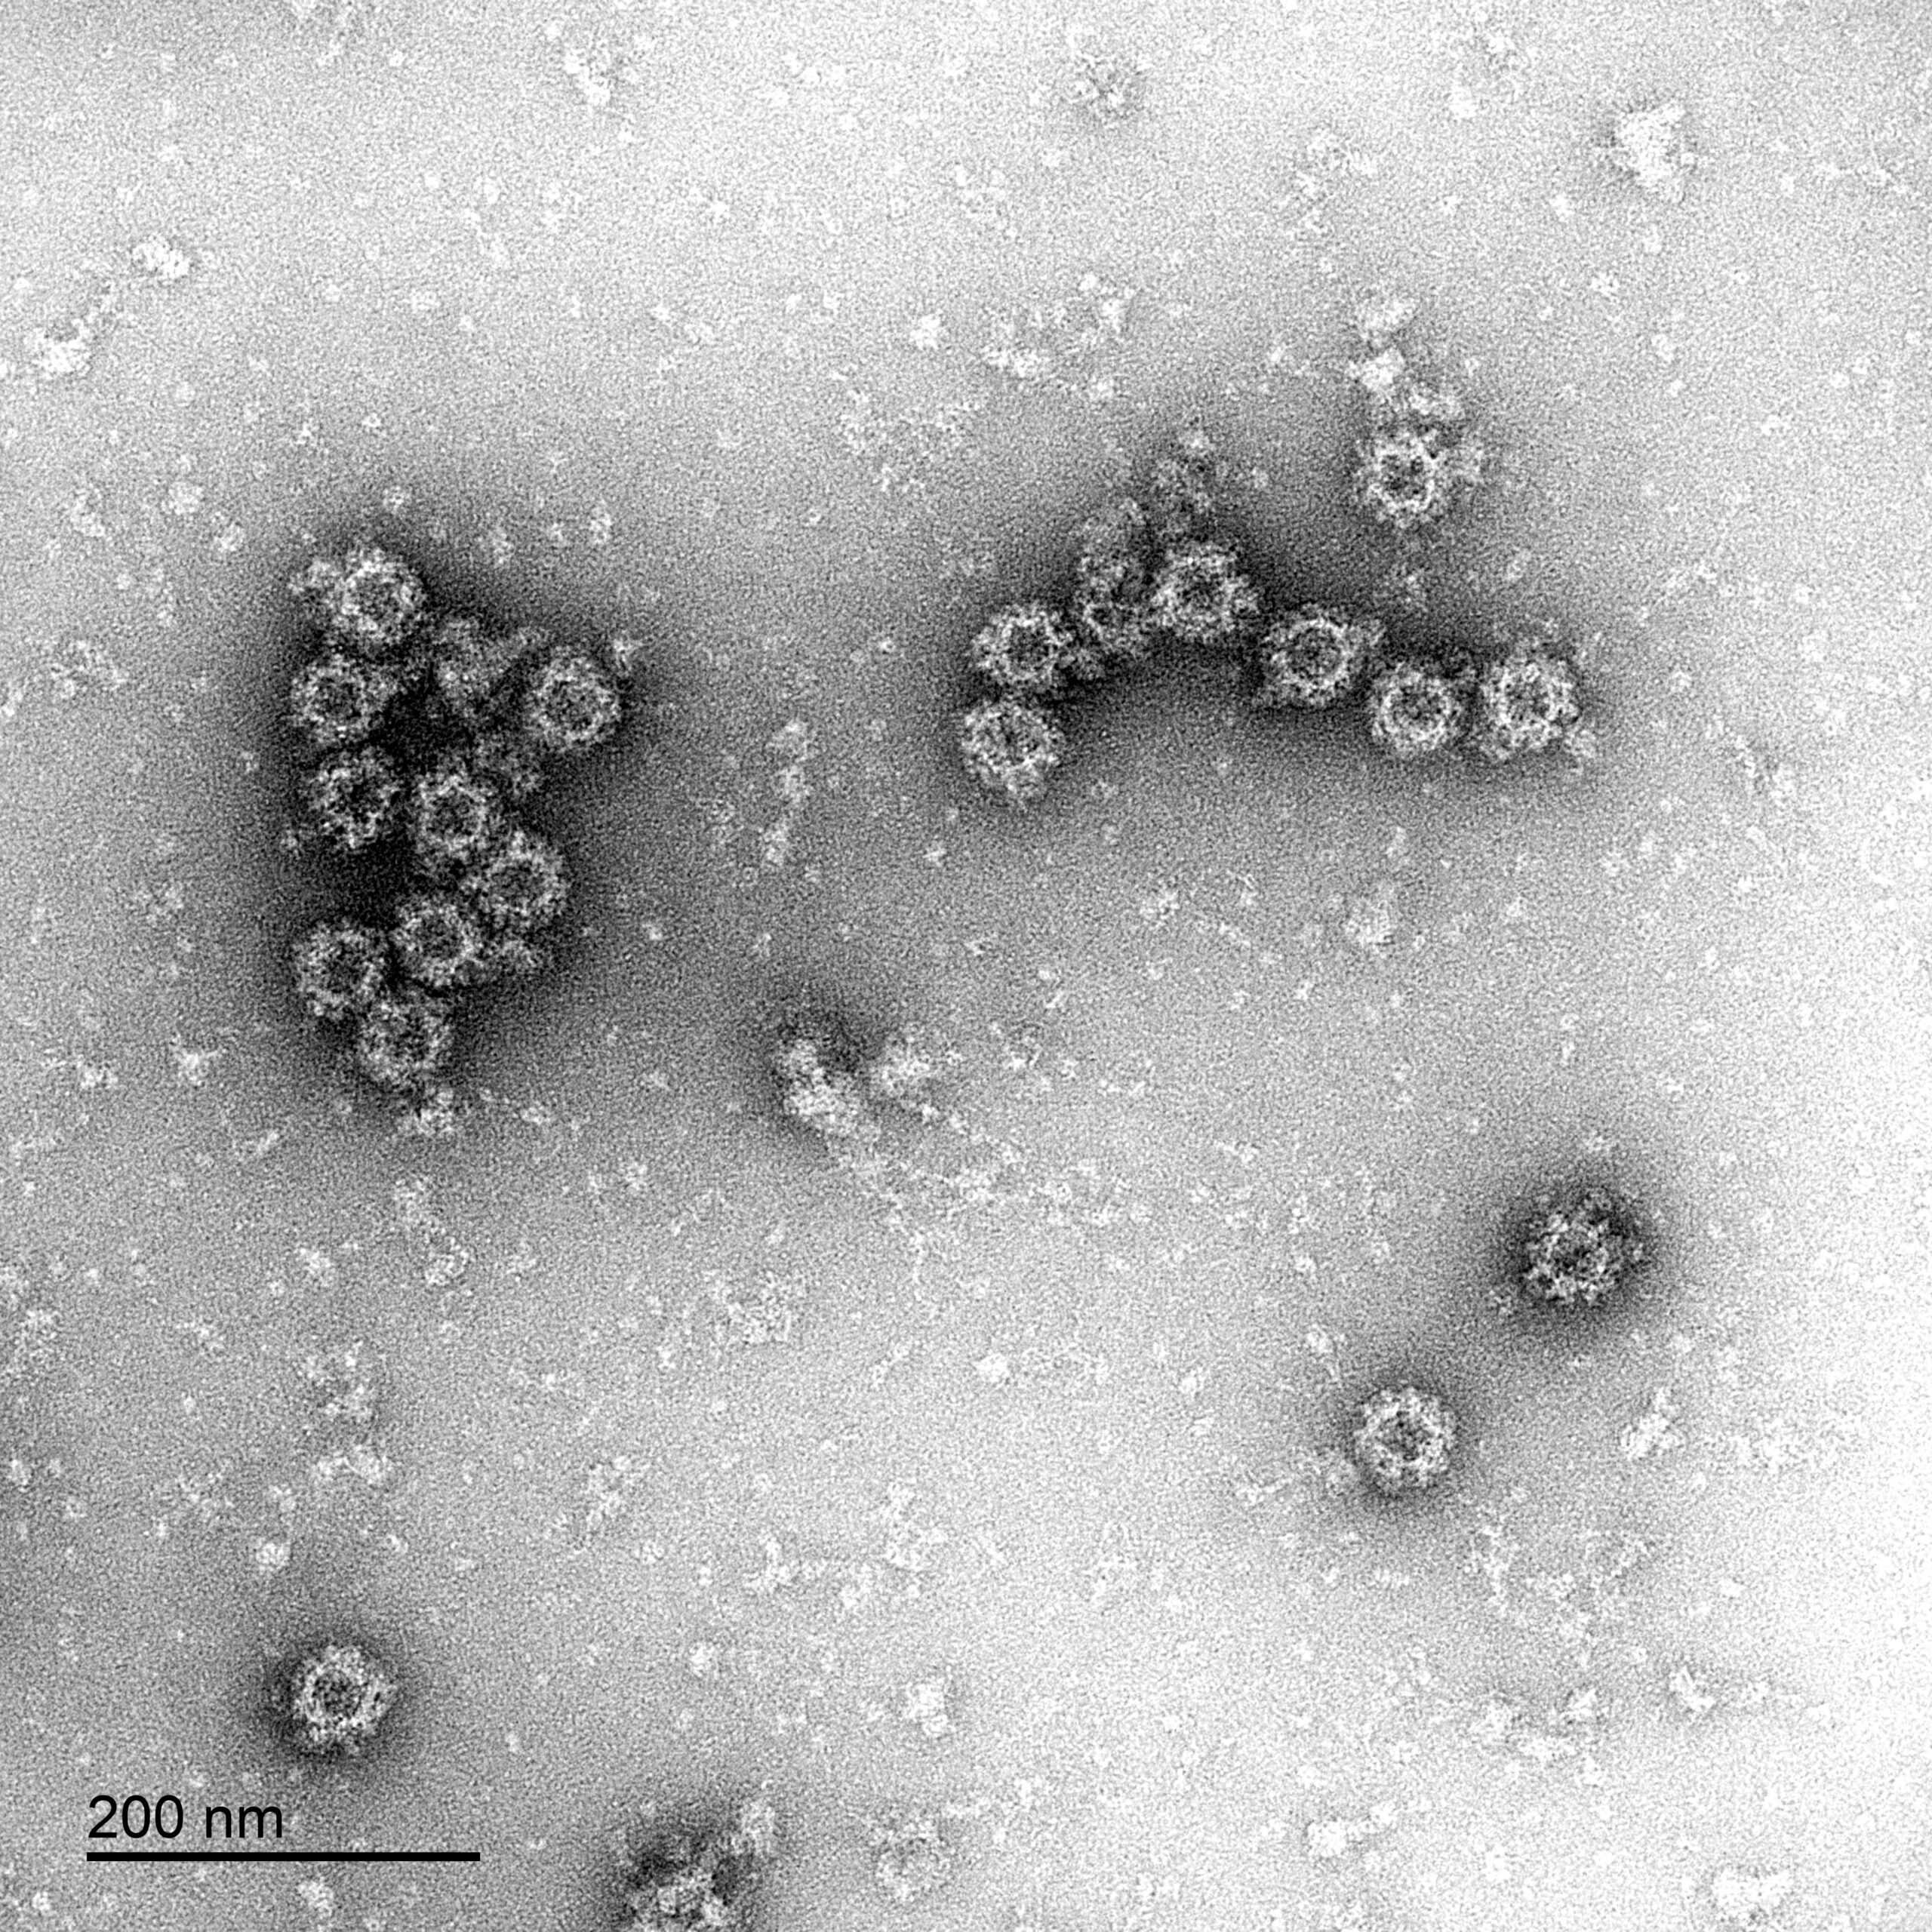 New NorovirusLike Particles Available The Native Antigen Company